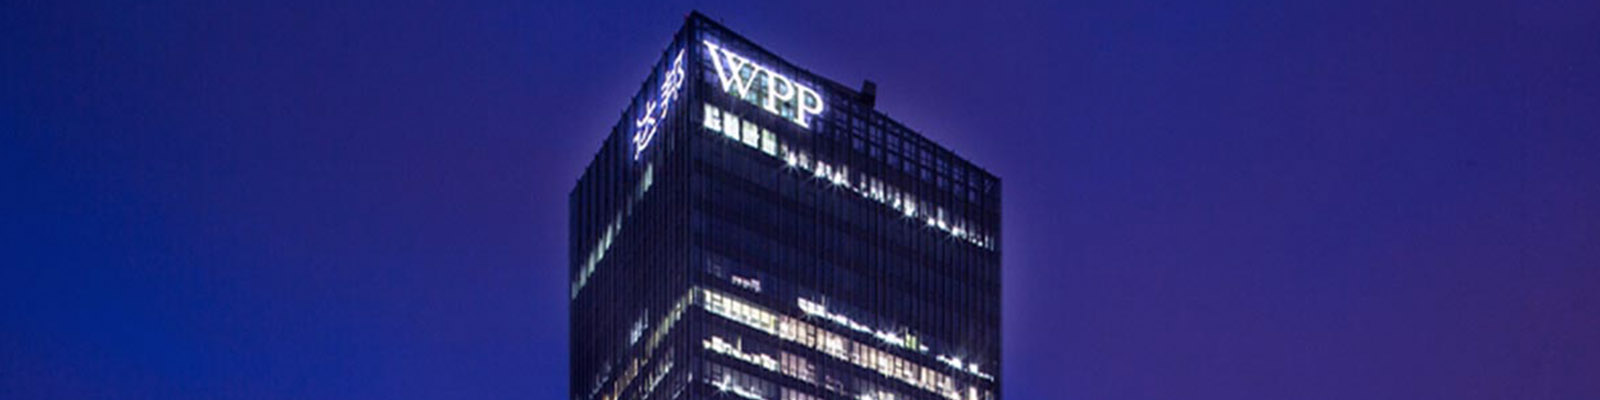 WPP building exterior